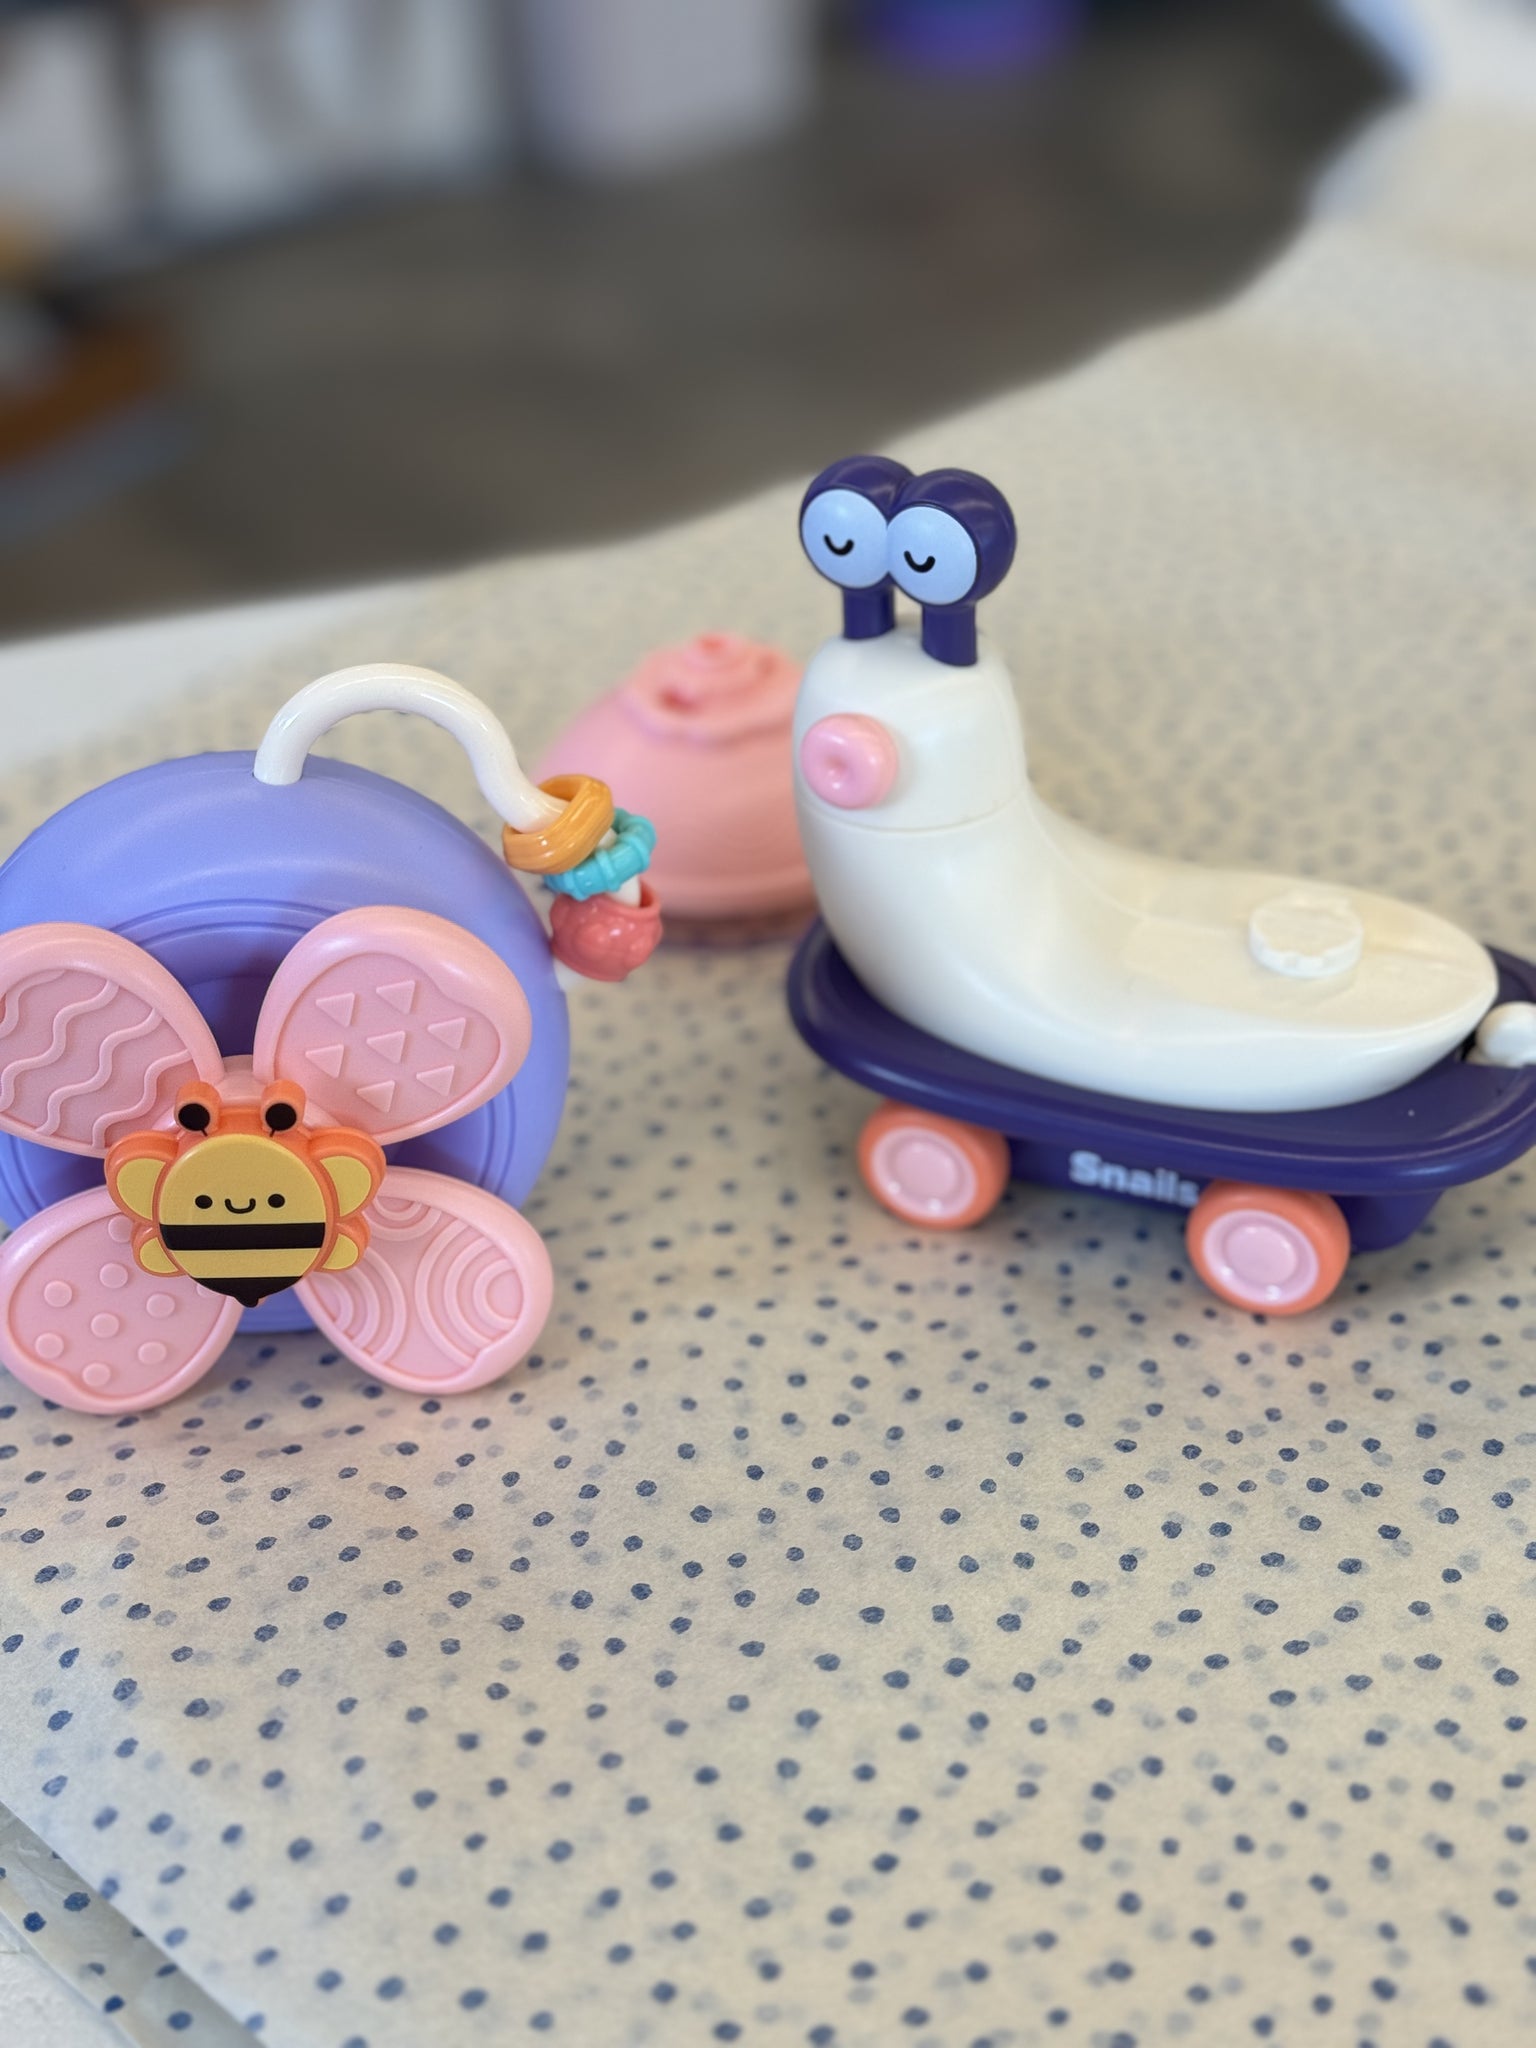 Table/Bath Suction Activity Toy - Snail